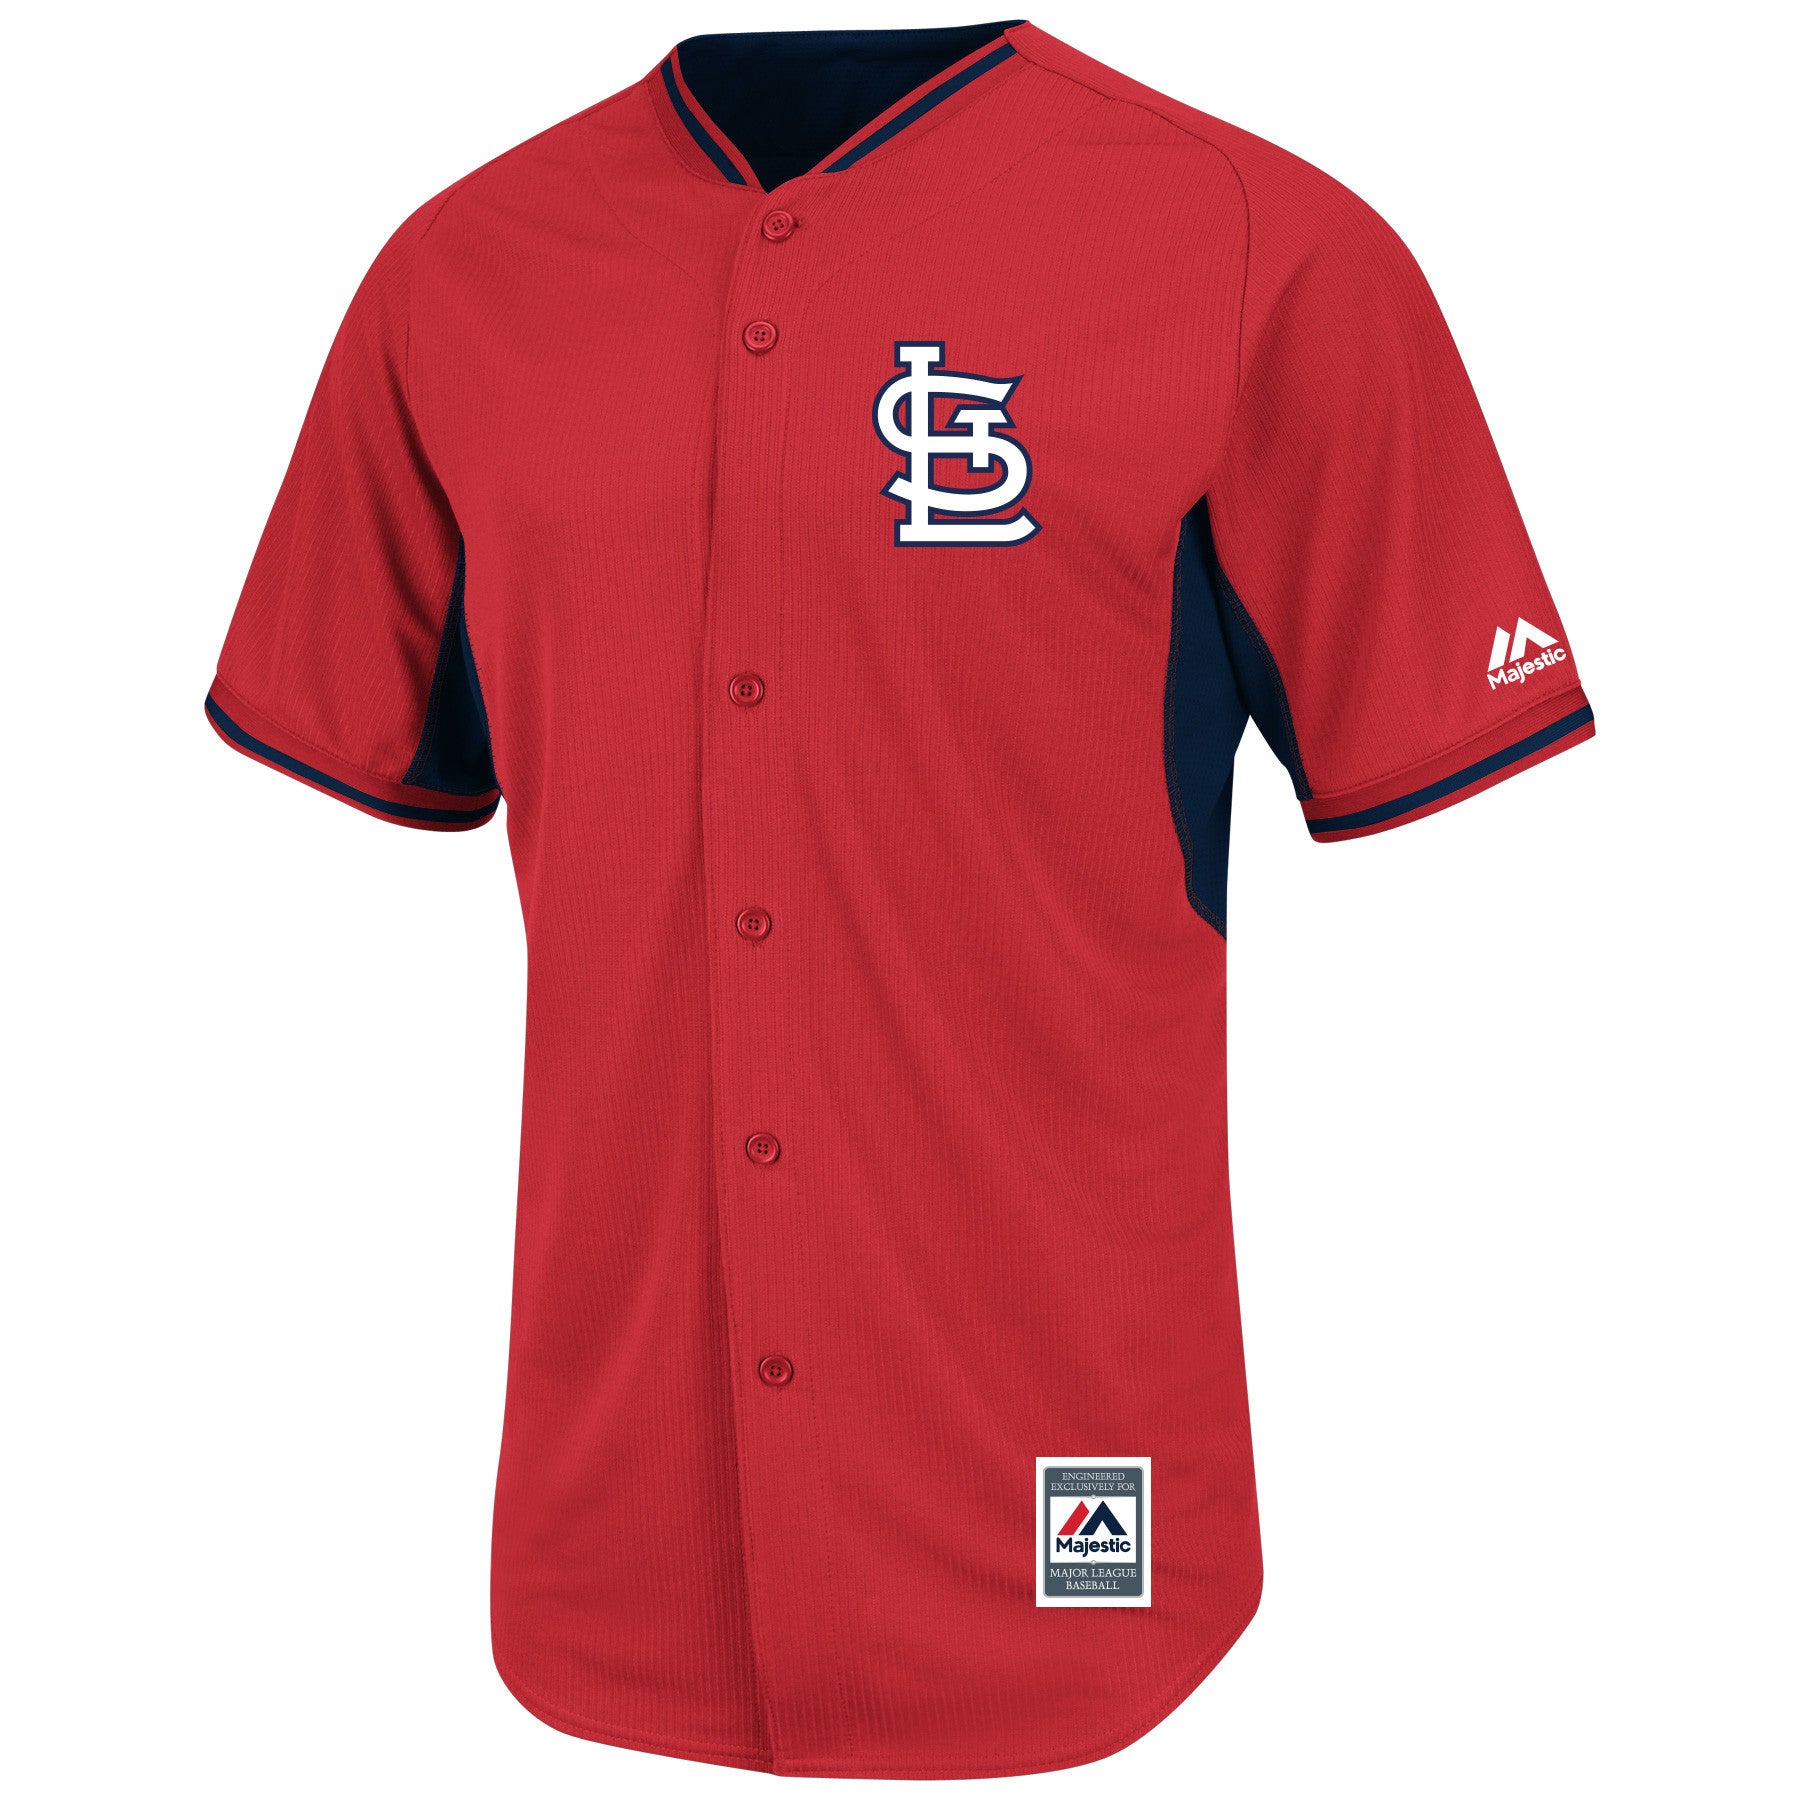 St. Louis Cardinals Majestic Cool Base MLB Baseball Jersey Mens size Small